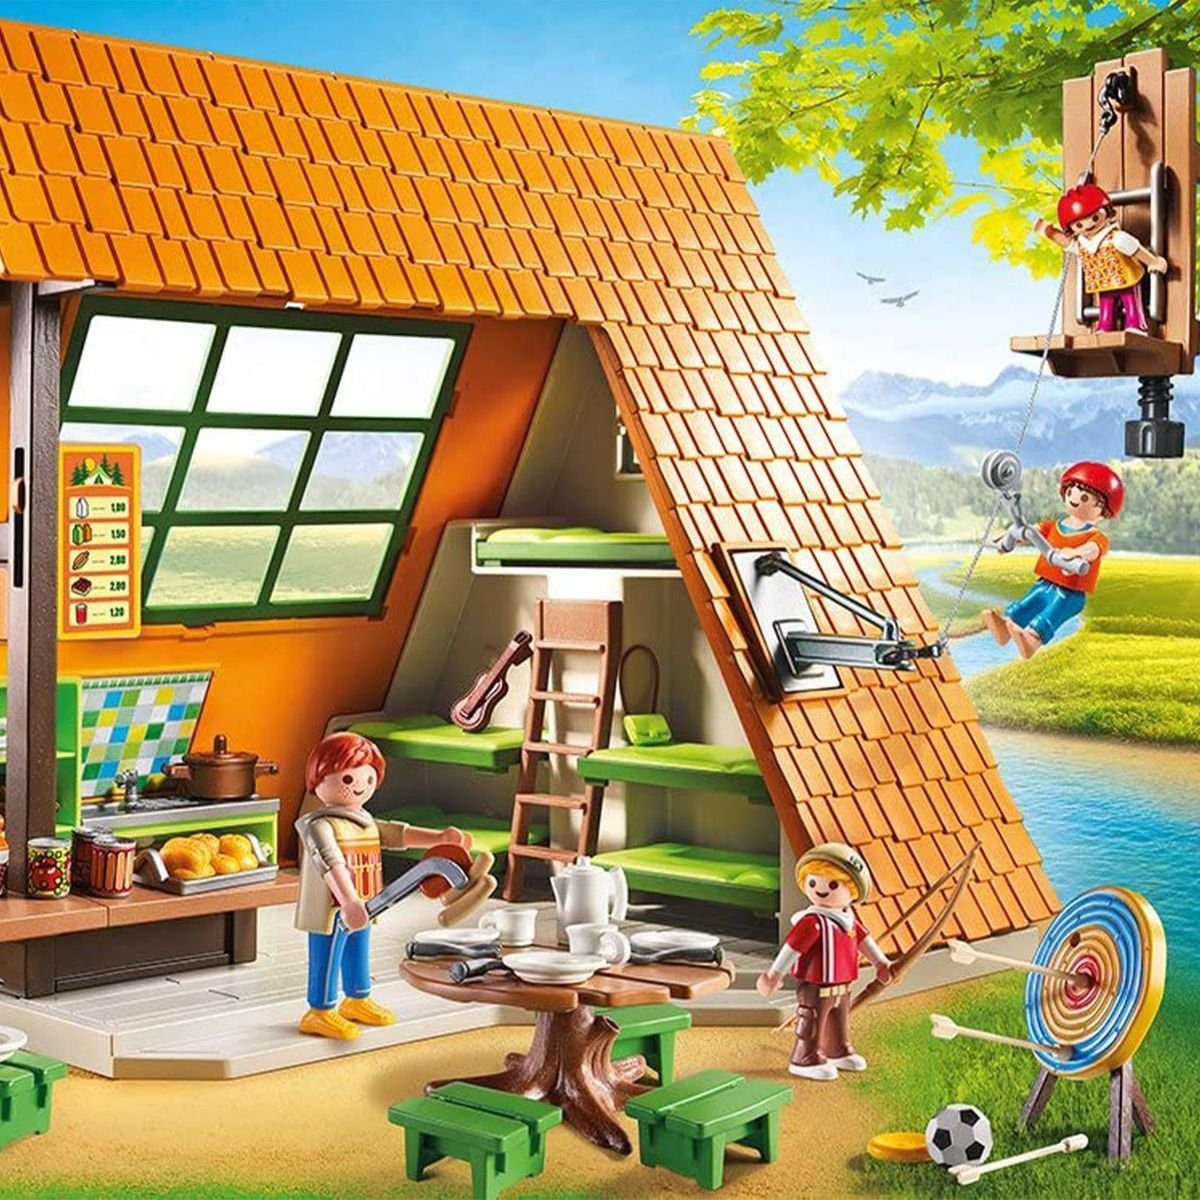 Playmobil® Spielwelt PLAYMOBIL® 6887 - Summer Fun - Großes Feriencamp